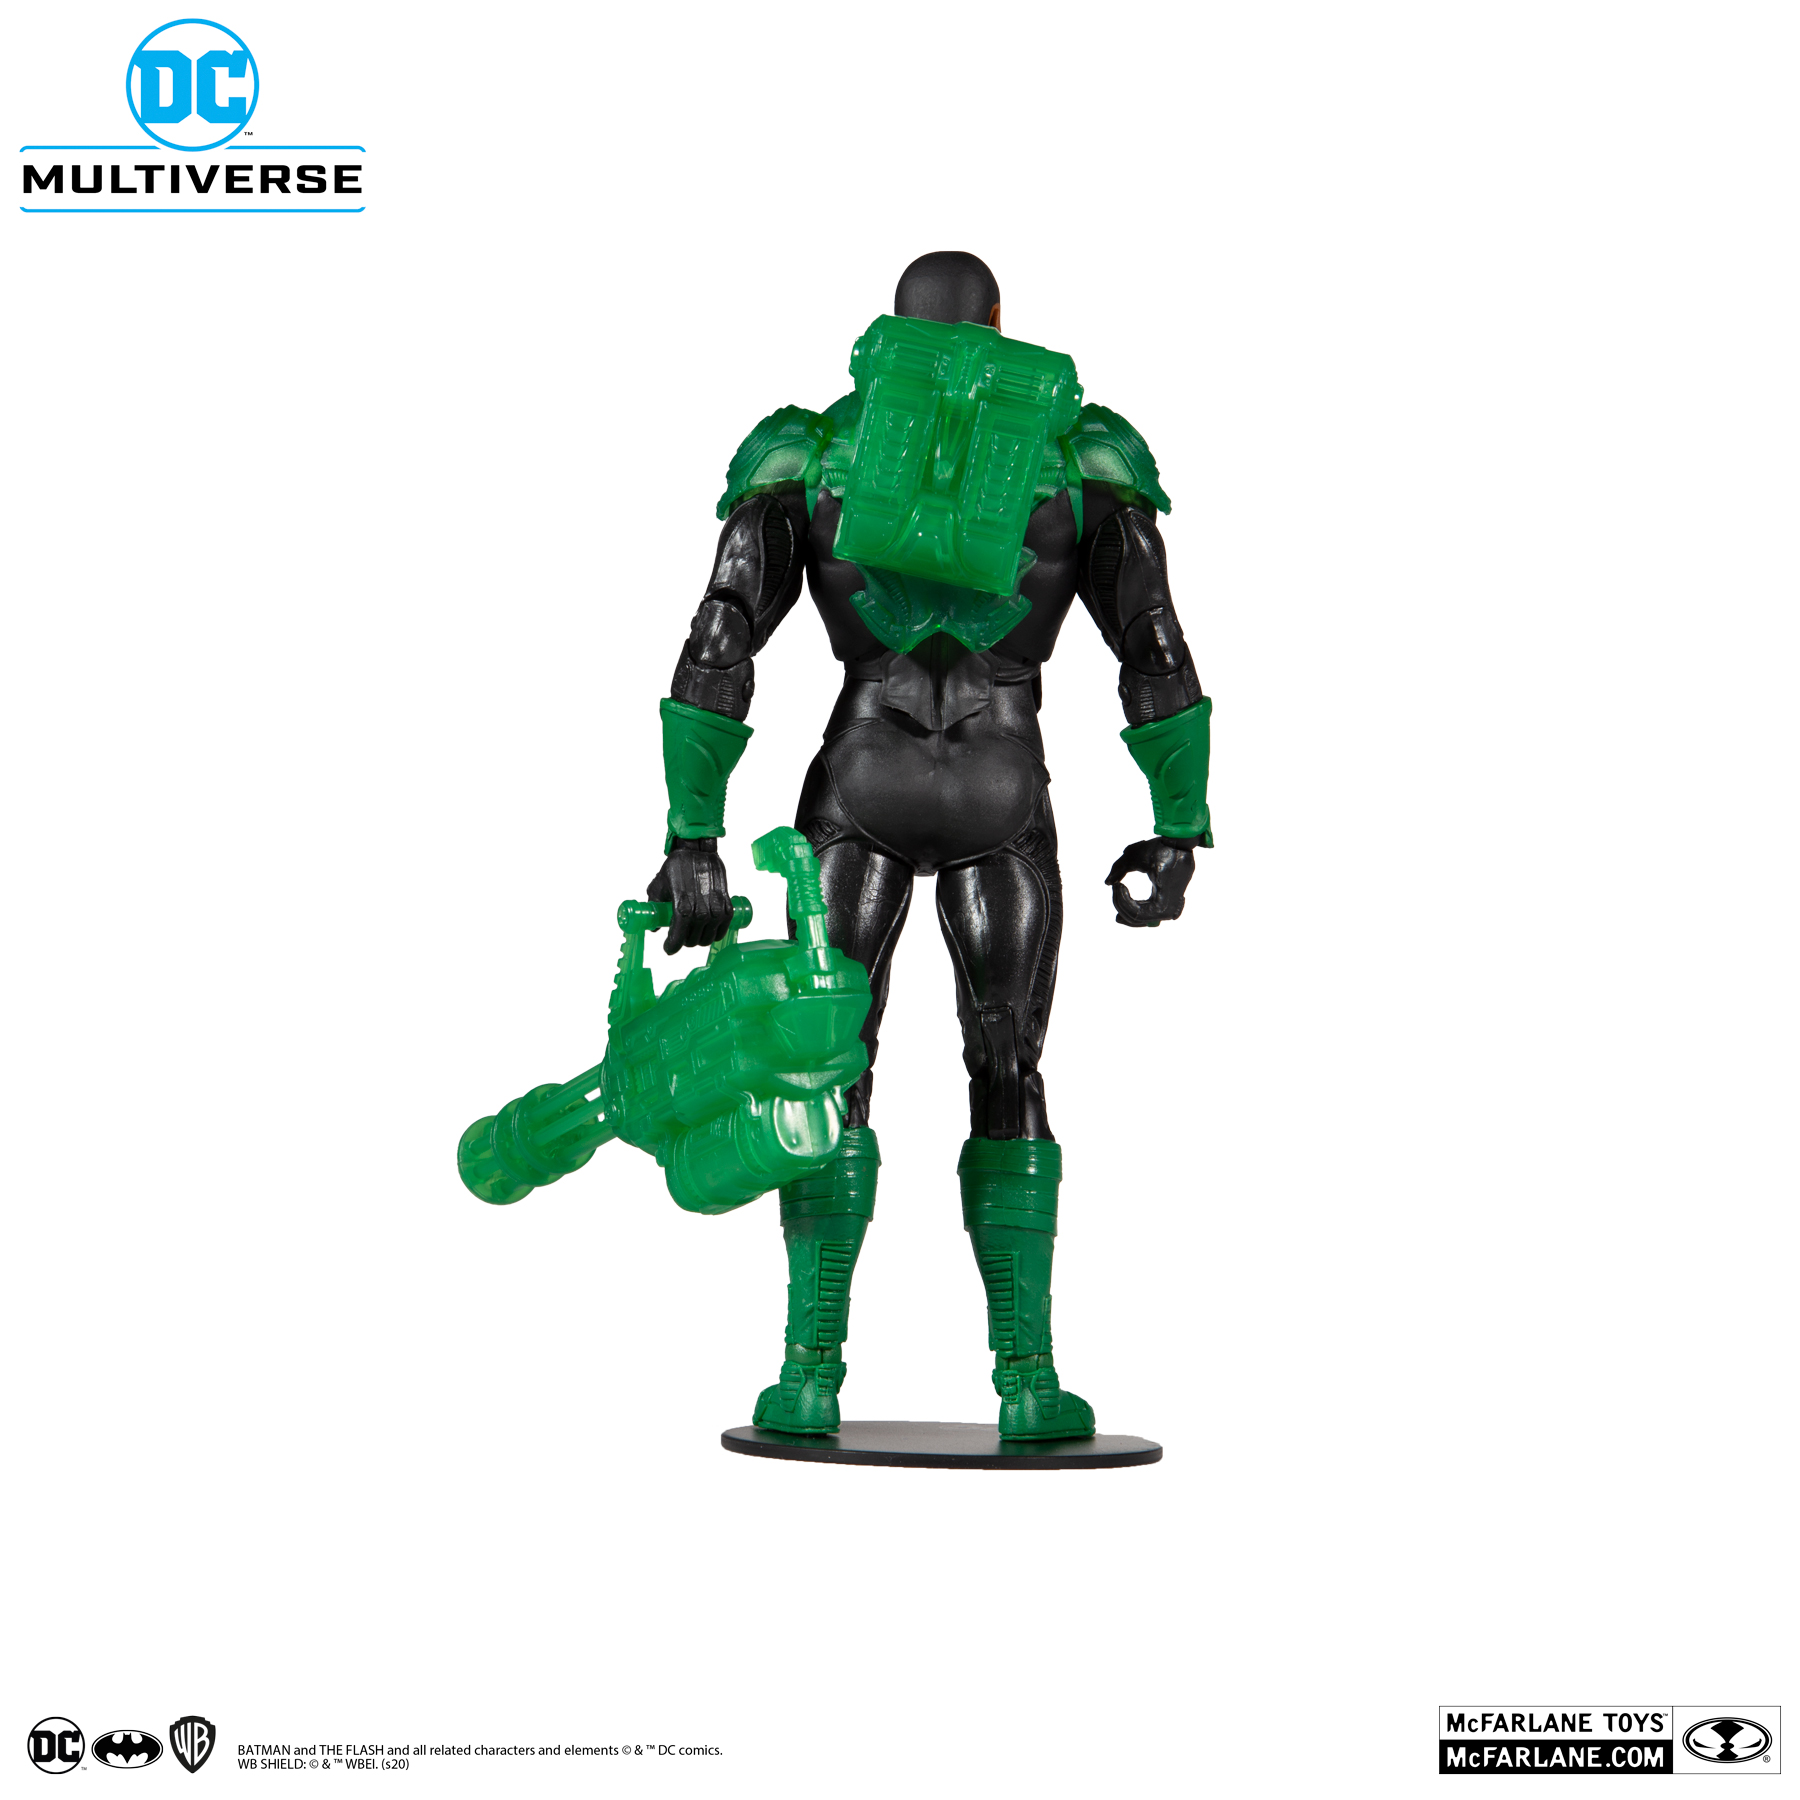 McFarlane Toys DC Multiverse Modern Comic Green Lantern John Stewart 7" Inch Action Figure for sale online 